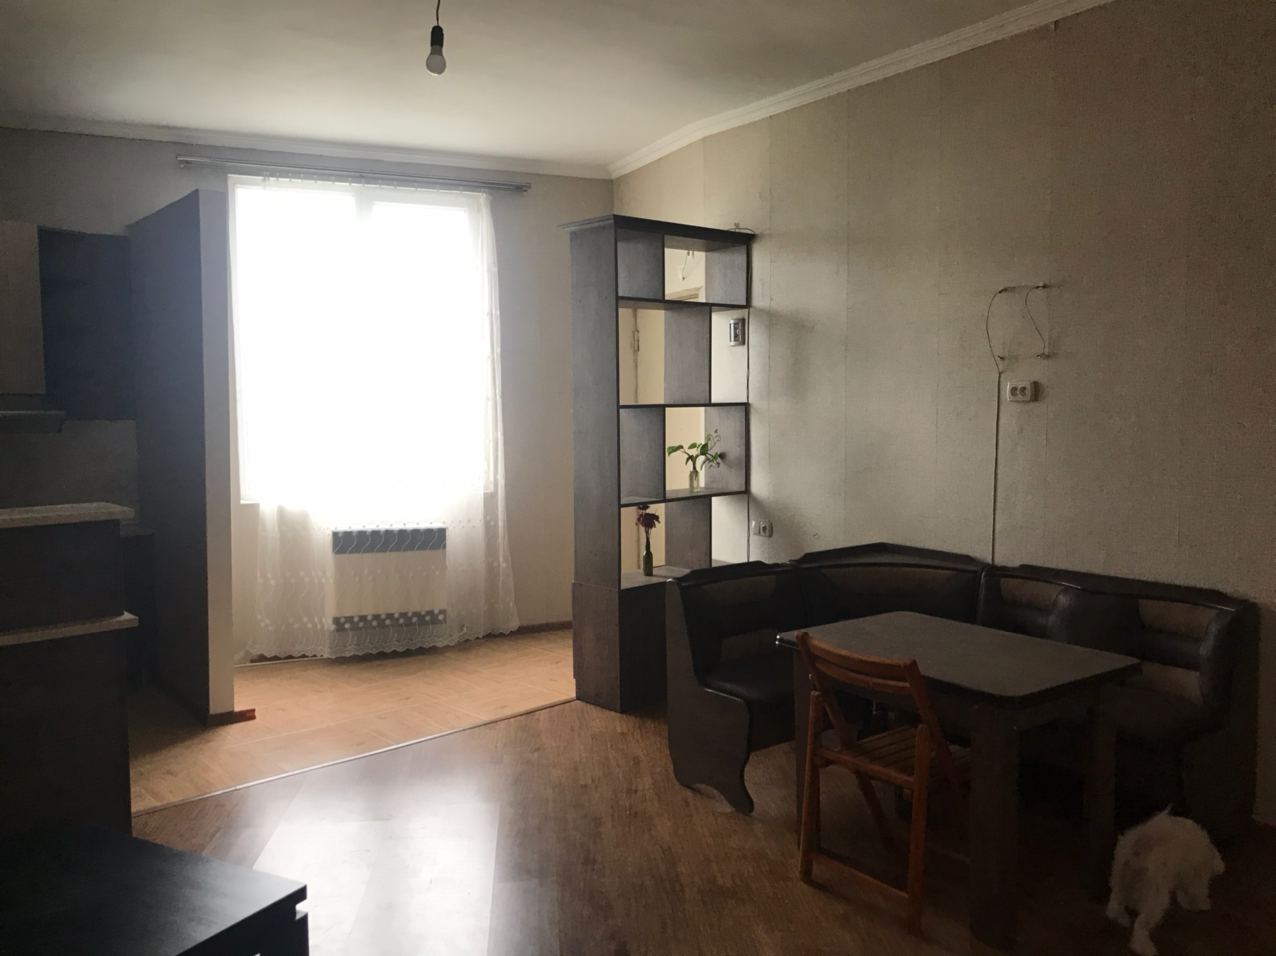 Guramishvili, Nadzaladevi District, Tbilisi, 2 Bedrooms Bedrooms, ,1 BathroomBathrooms,Villa,For Sale,Guramishvili, Nadzaladevi District,2,3032